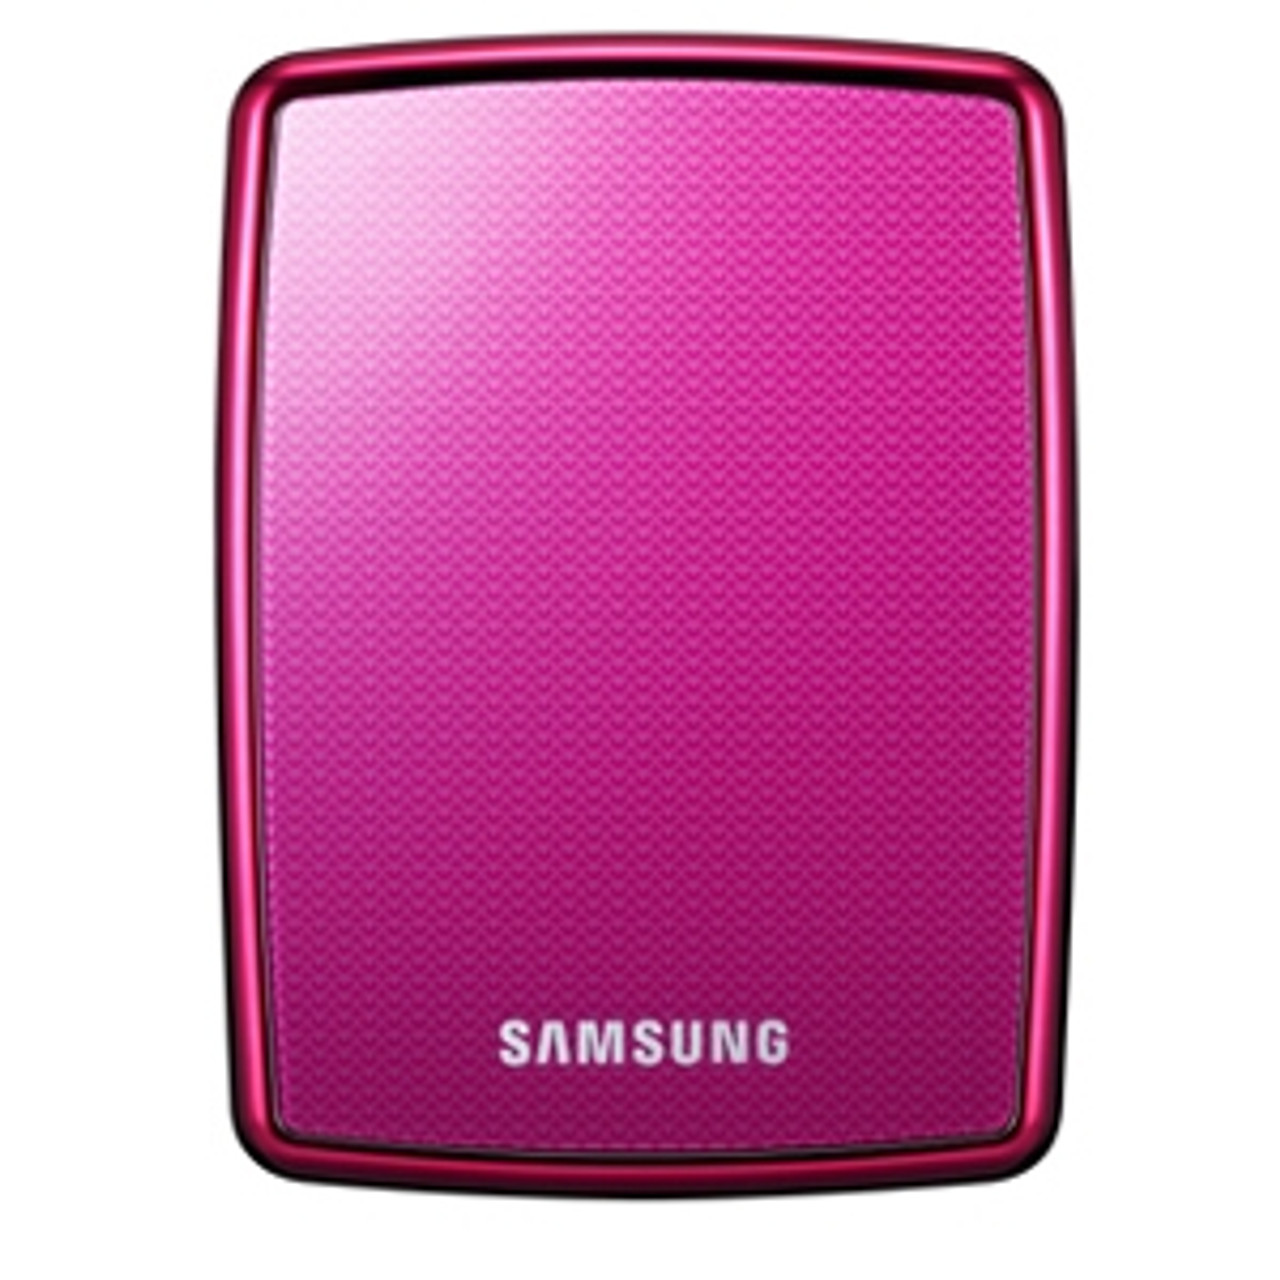 HXMU050DA/G72 - Samsung S2 Portable HXMU050DA 500 GB 2.5 External Hard Drive - Sweet Pink - 5400 rpm - 8 MB Buffer - Hot Swappable